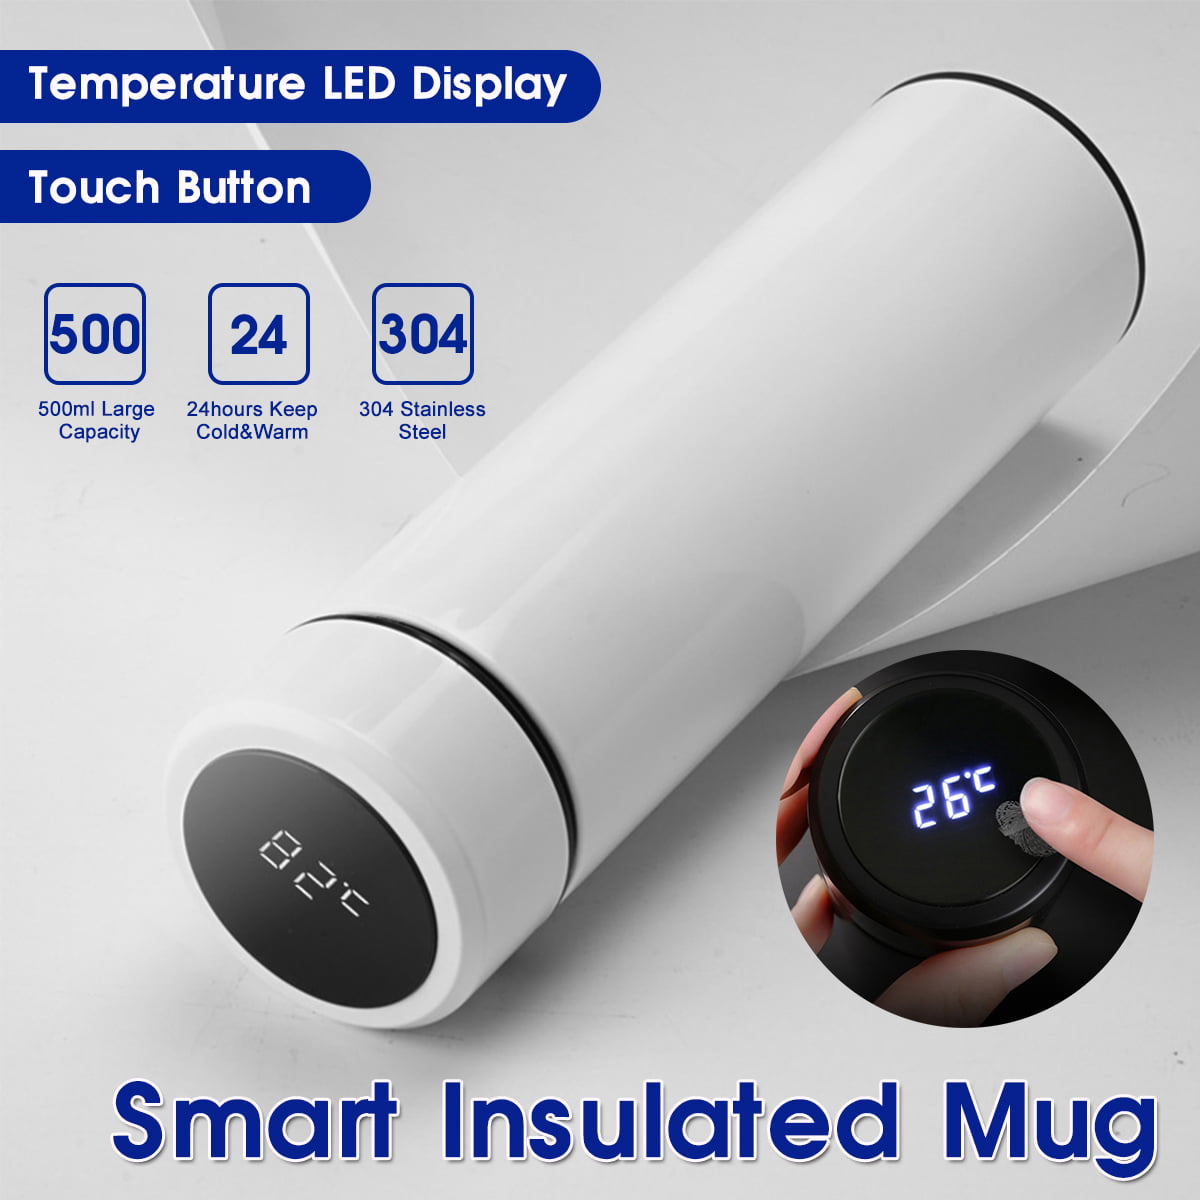 17OZ/500ml Smart Insulated Mug, with LED Temperature